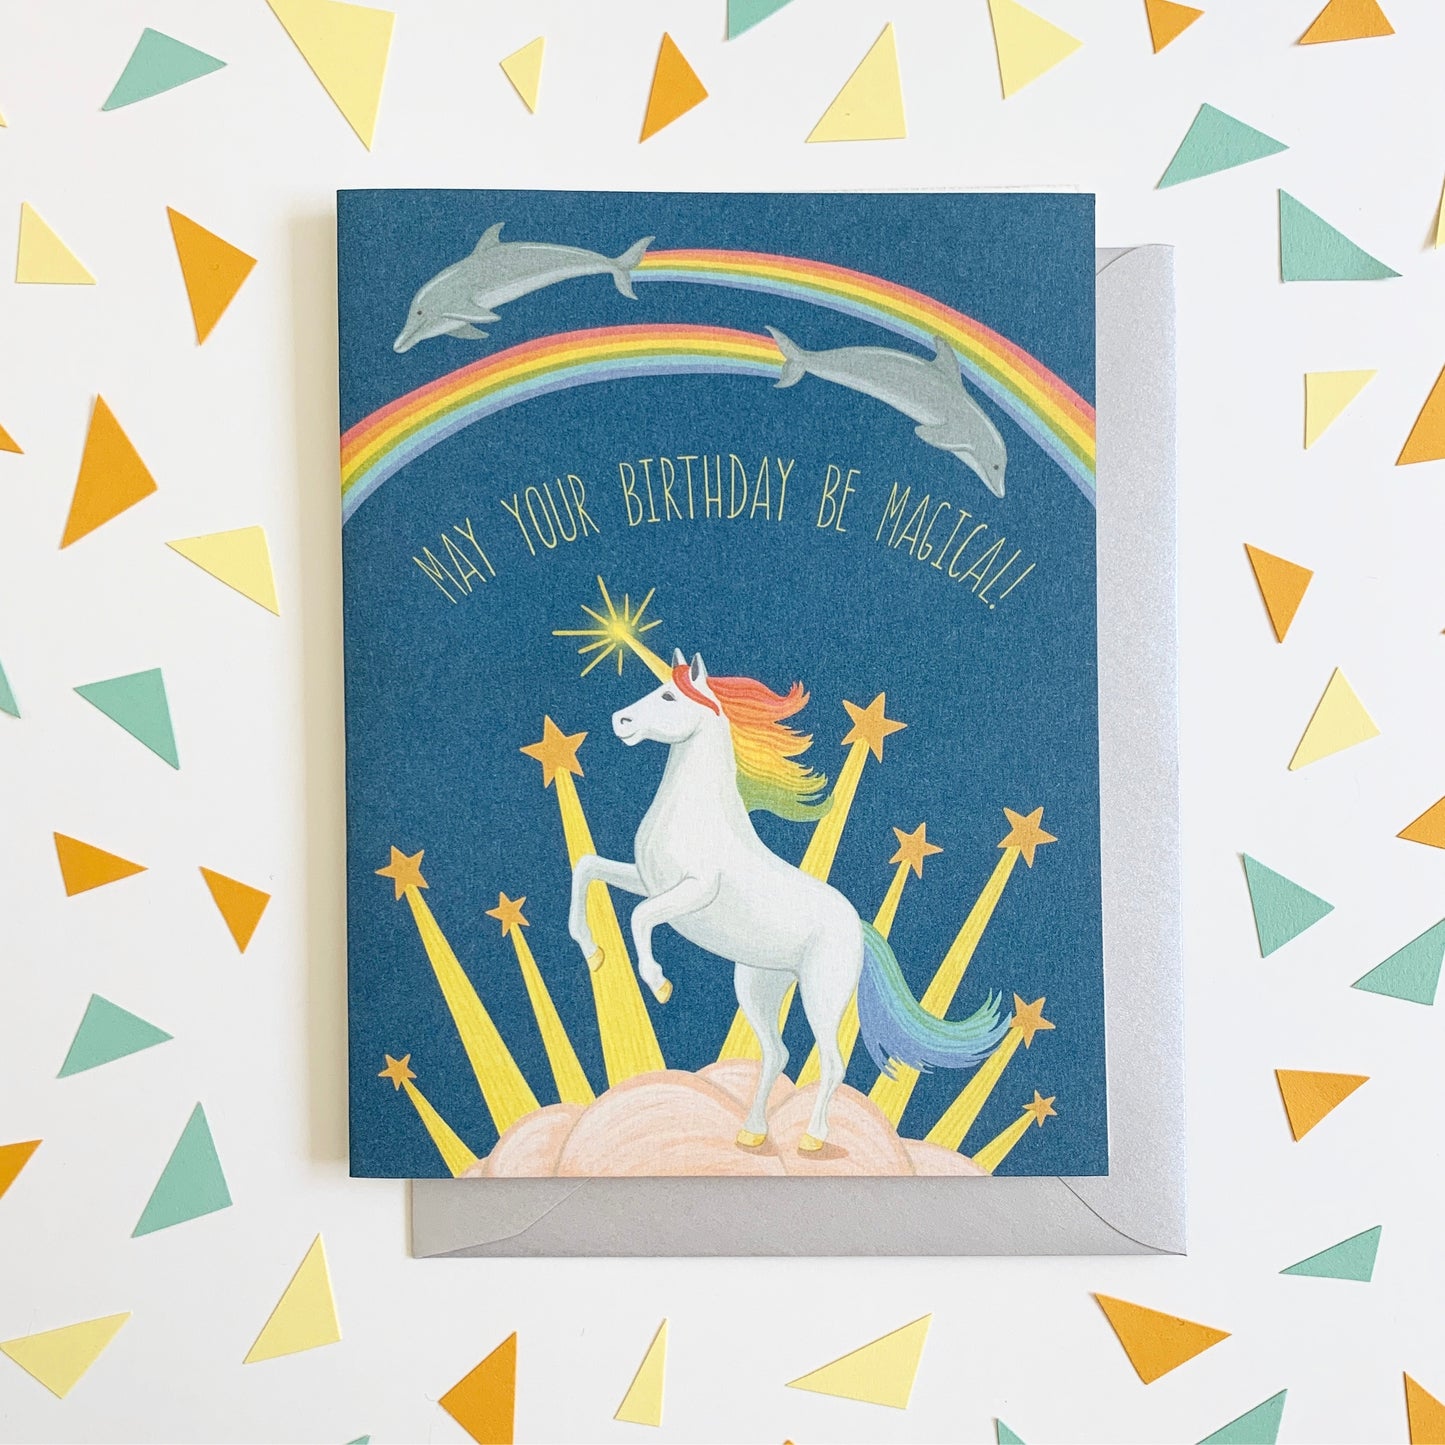 MAGICAL UNICORN, RAINBOWS AND DOLPHINS - BIRTHDAY GREETING CARD